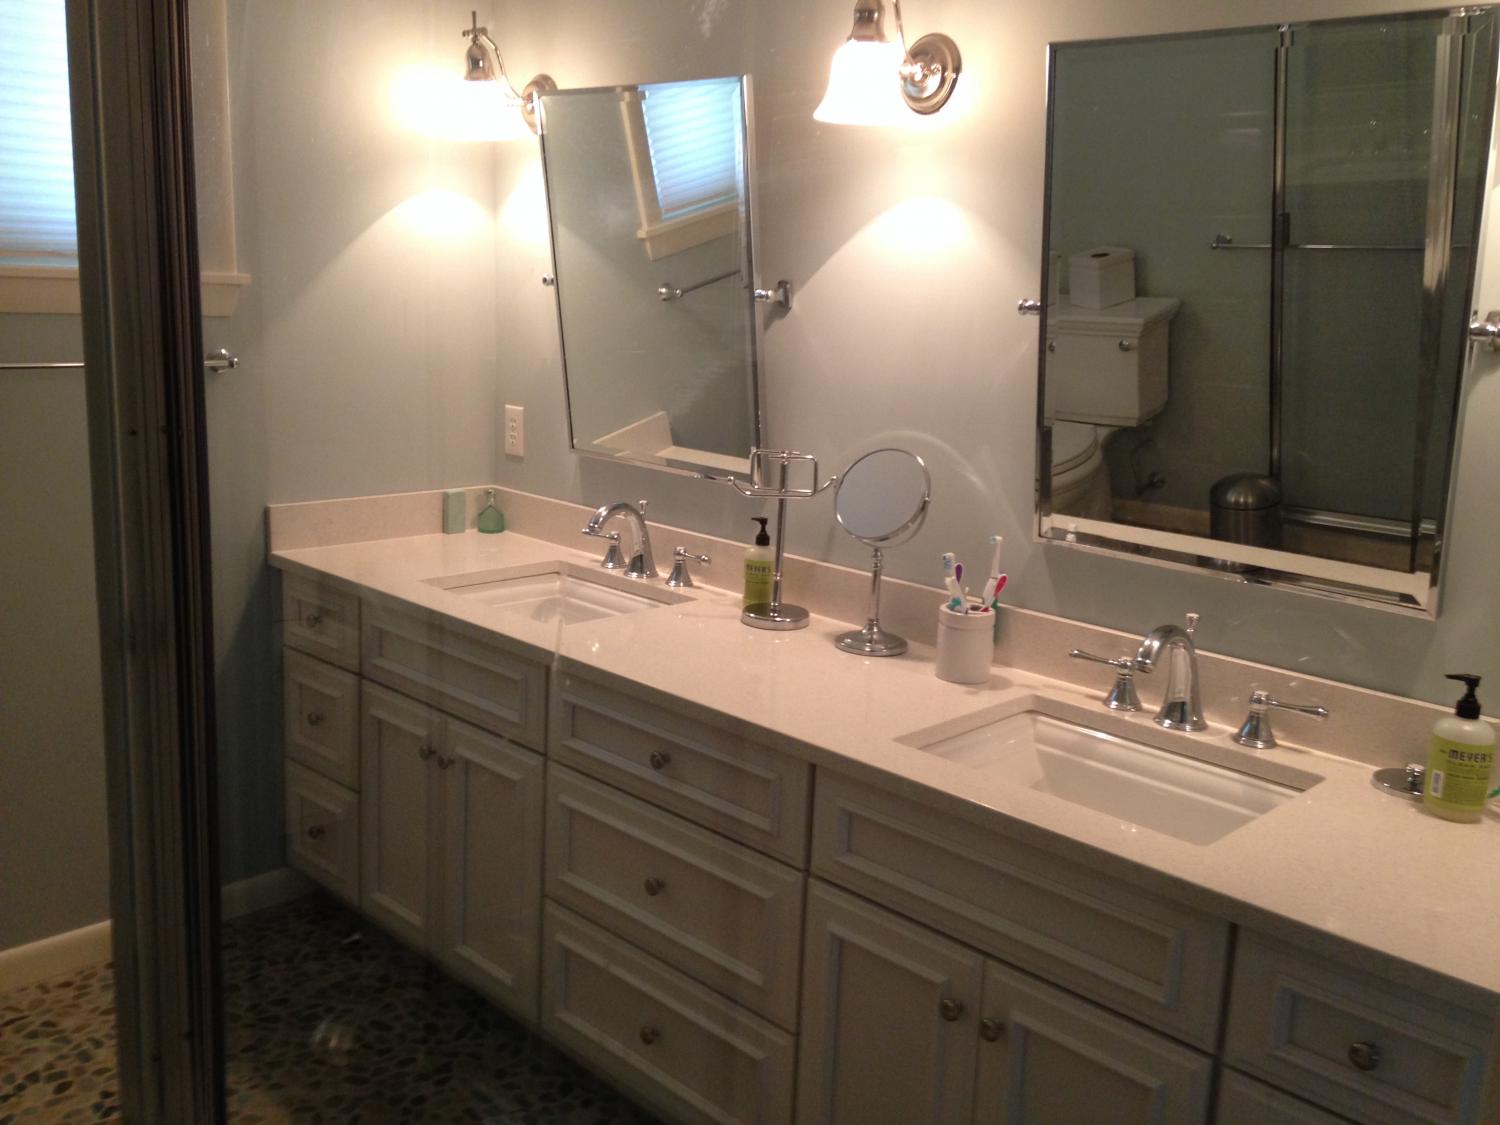 Bathroom remodel, installed new tile floor, vanities, mirrors, lights and painted walls